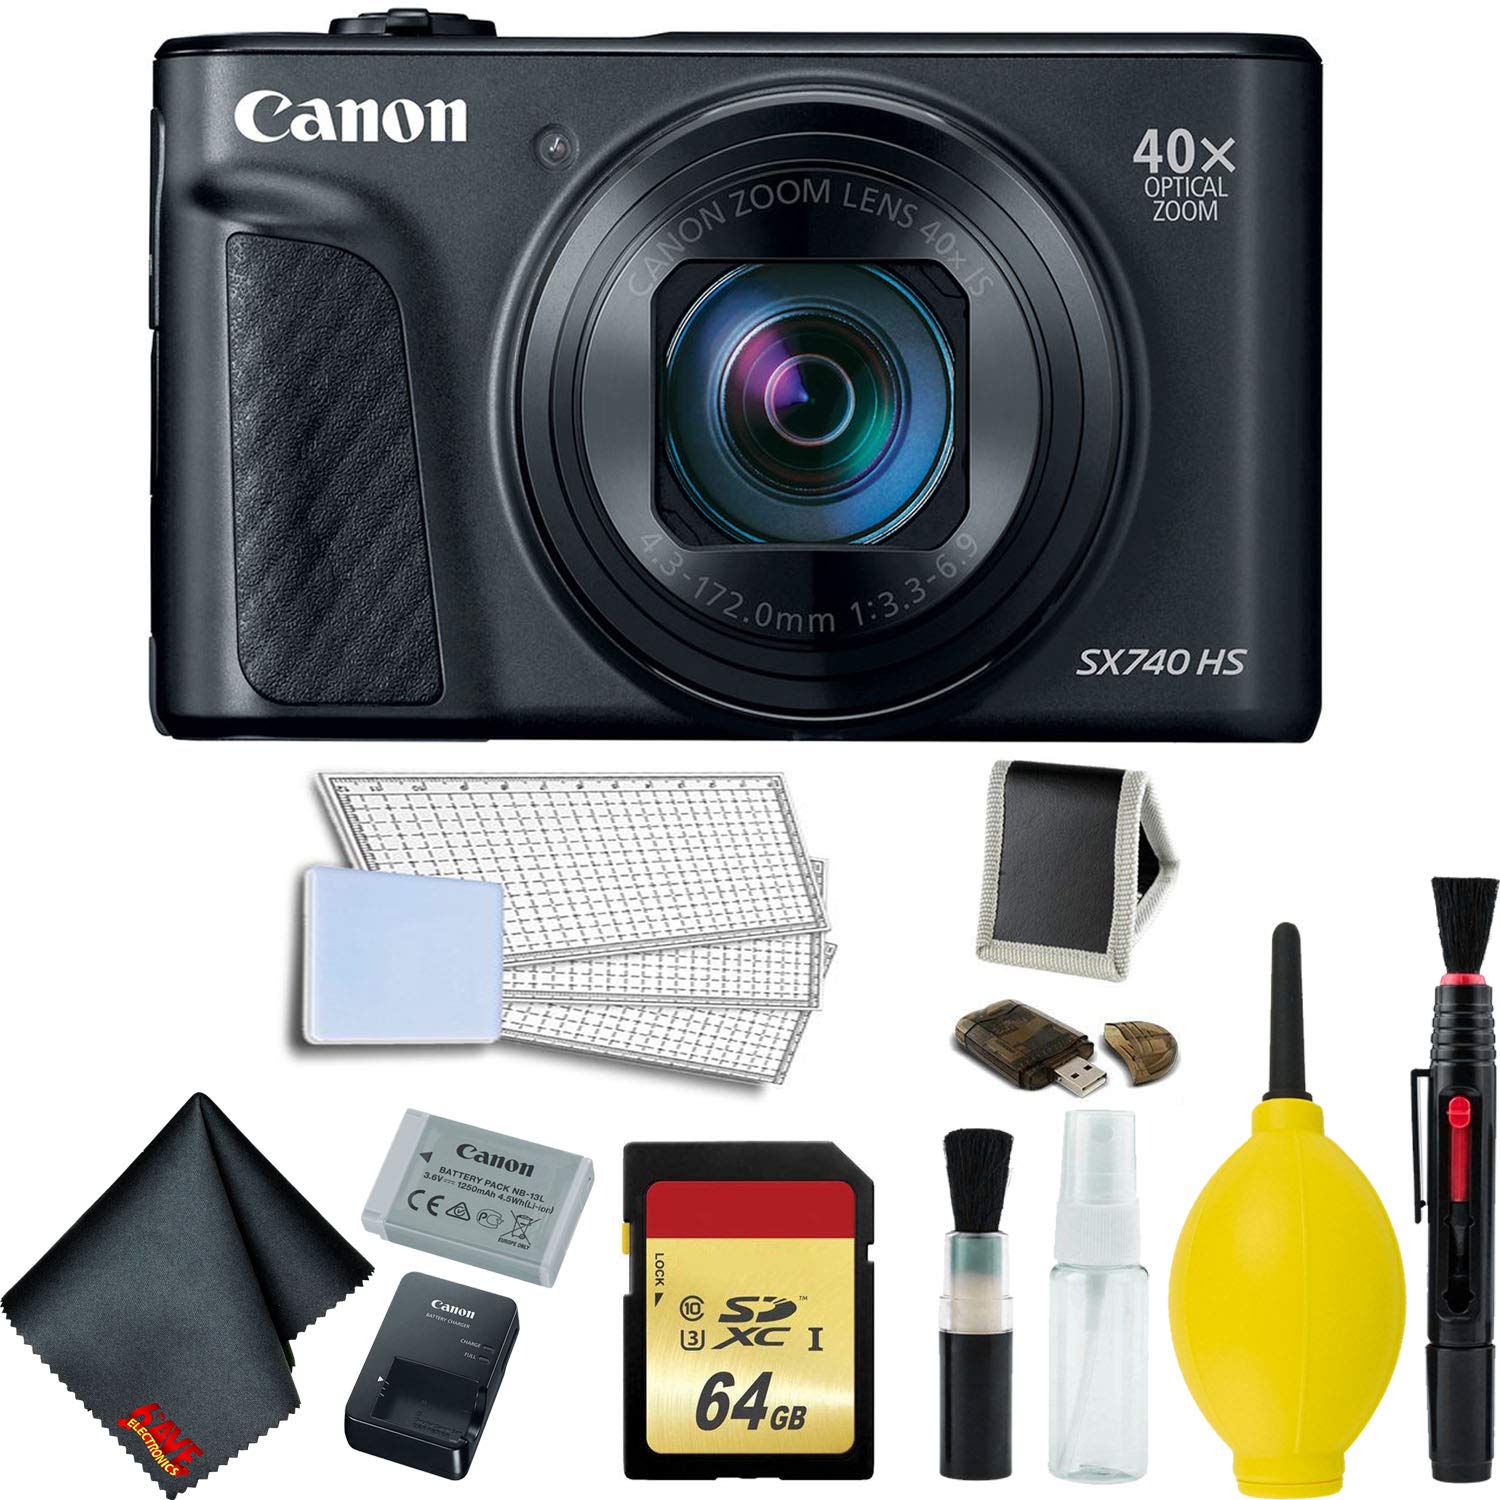 Canon PowerShot SX740 HS Digital Camera (Black) Memory Bundle - International Model